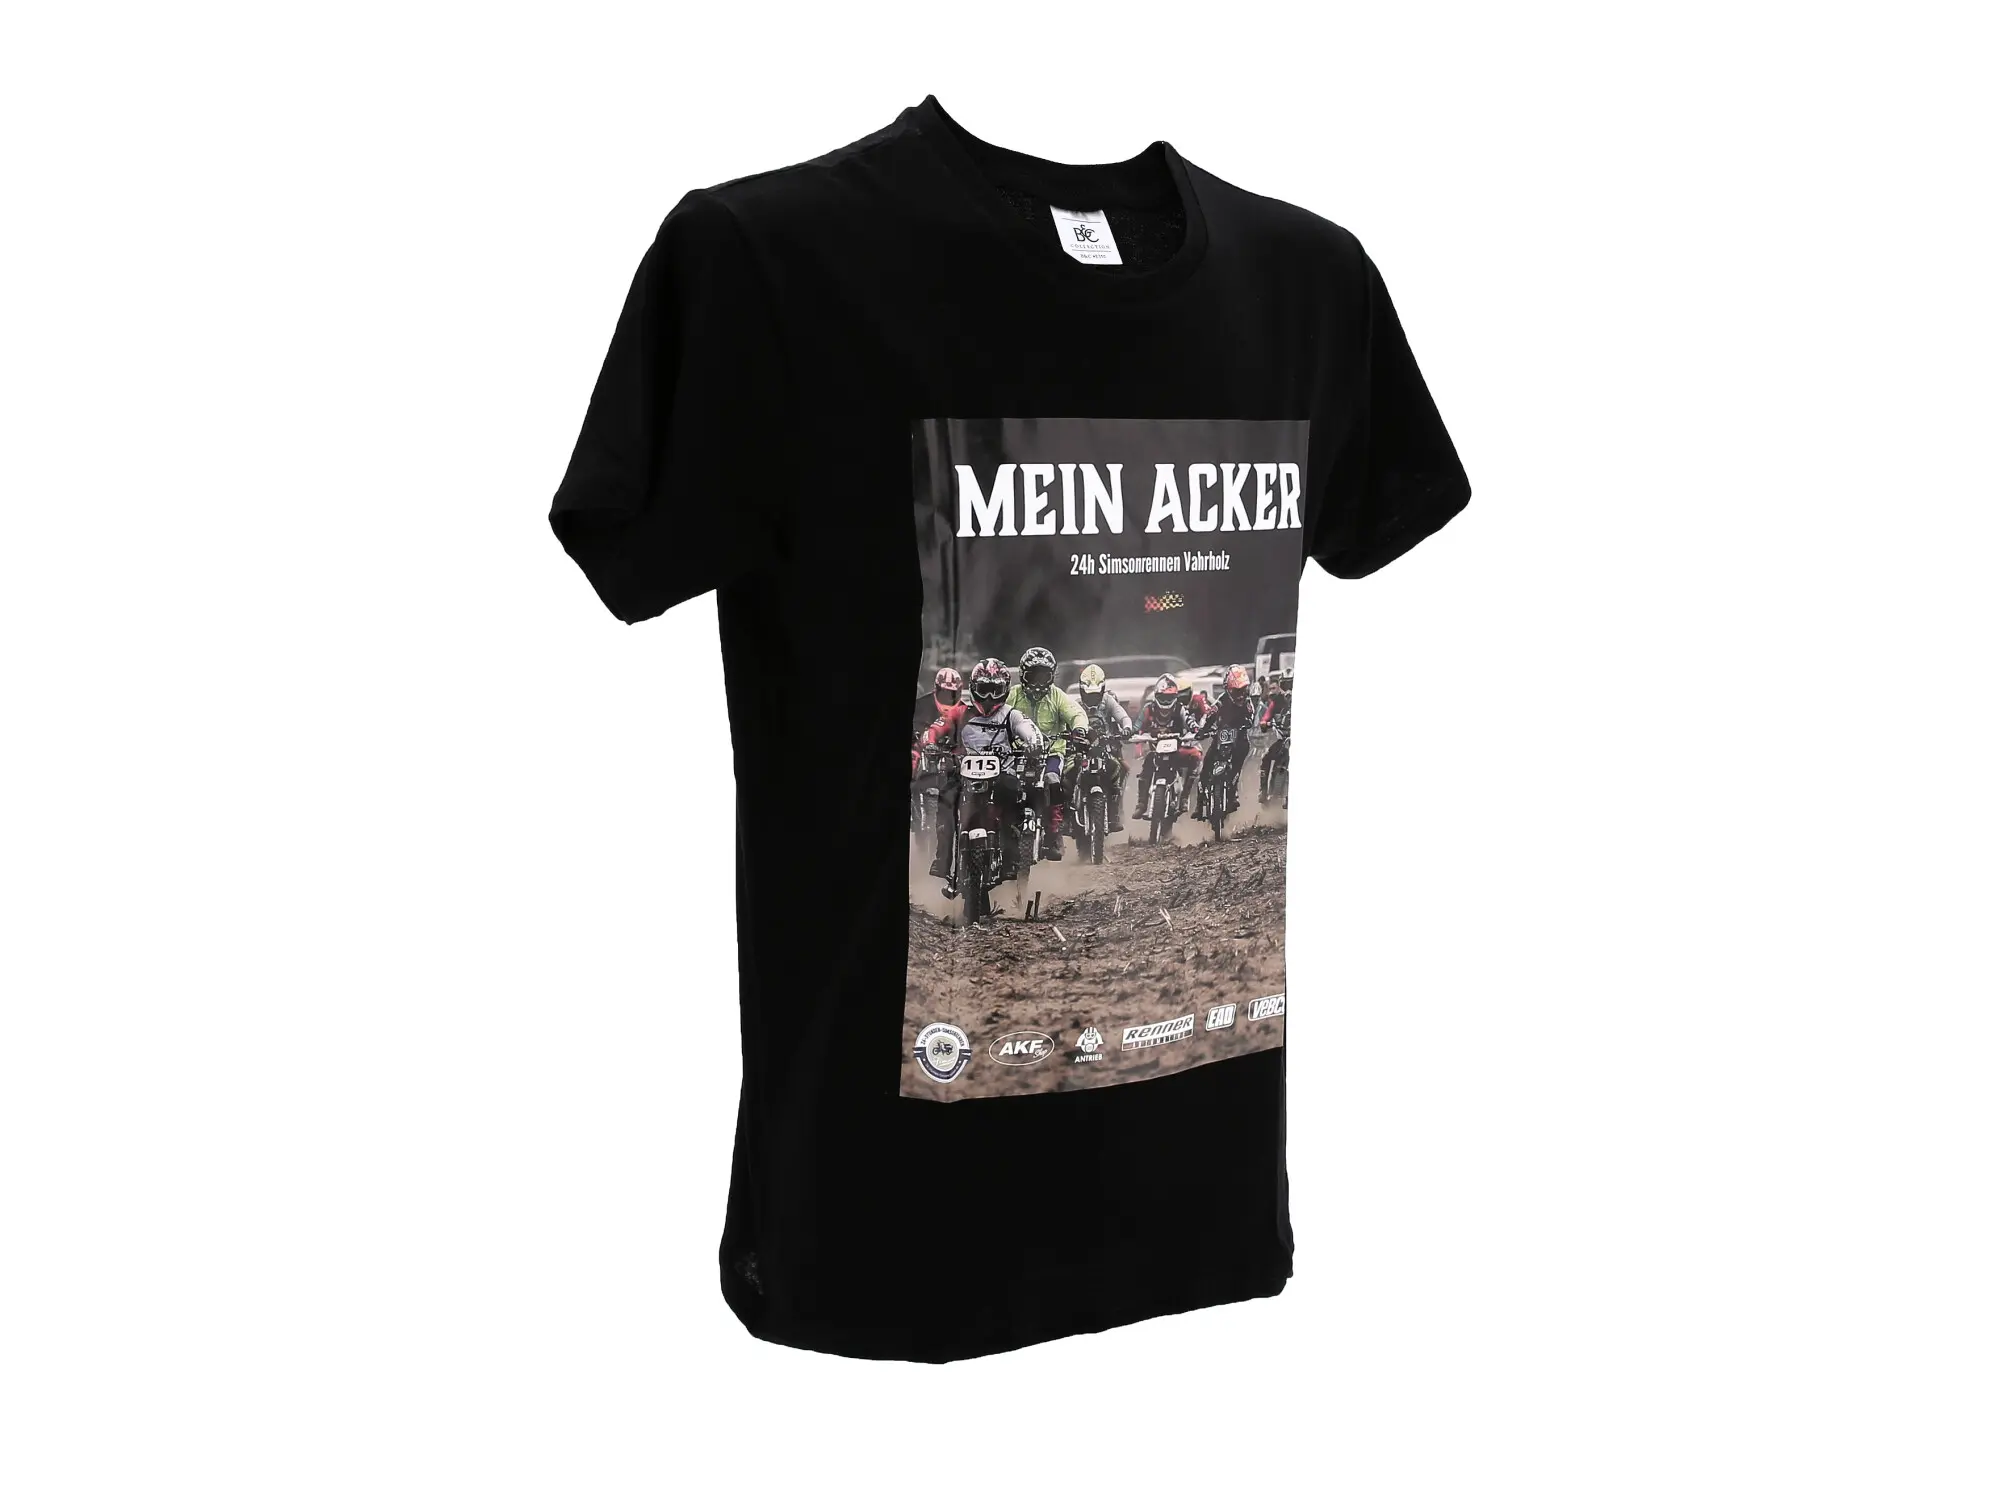 T-Shirt "Mein Acker - 24h Simsonrennen Vahrholz" in Schwarz, Art.-Nr.: 10072901 - Bild 1